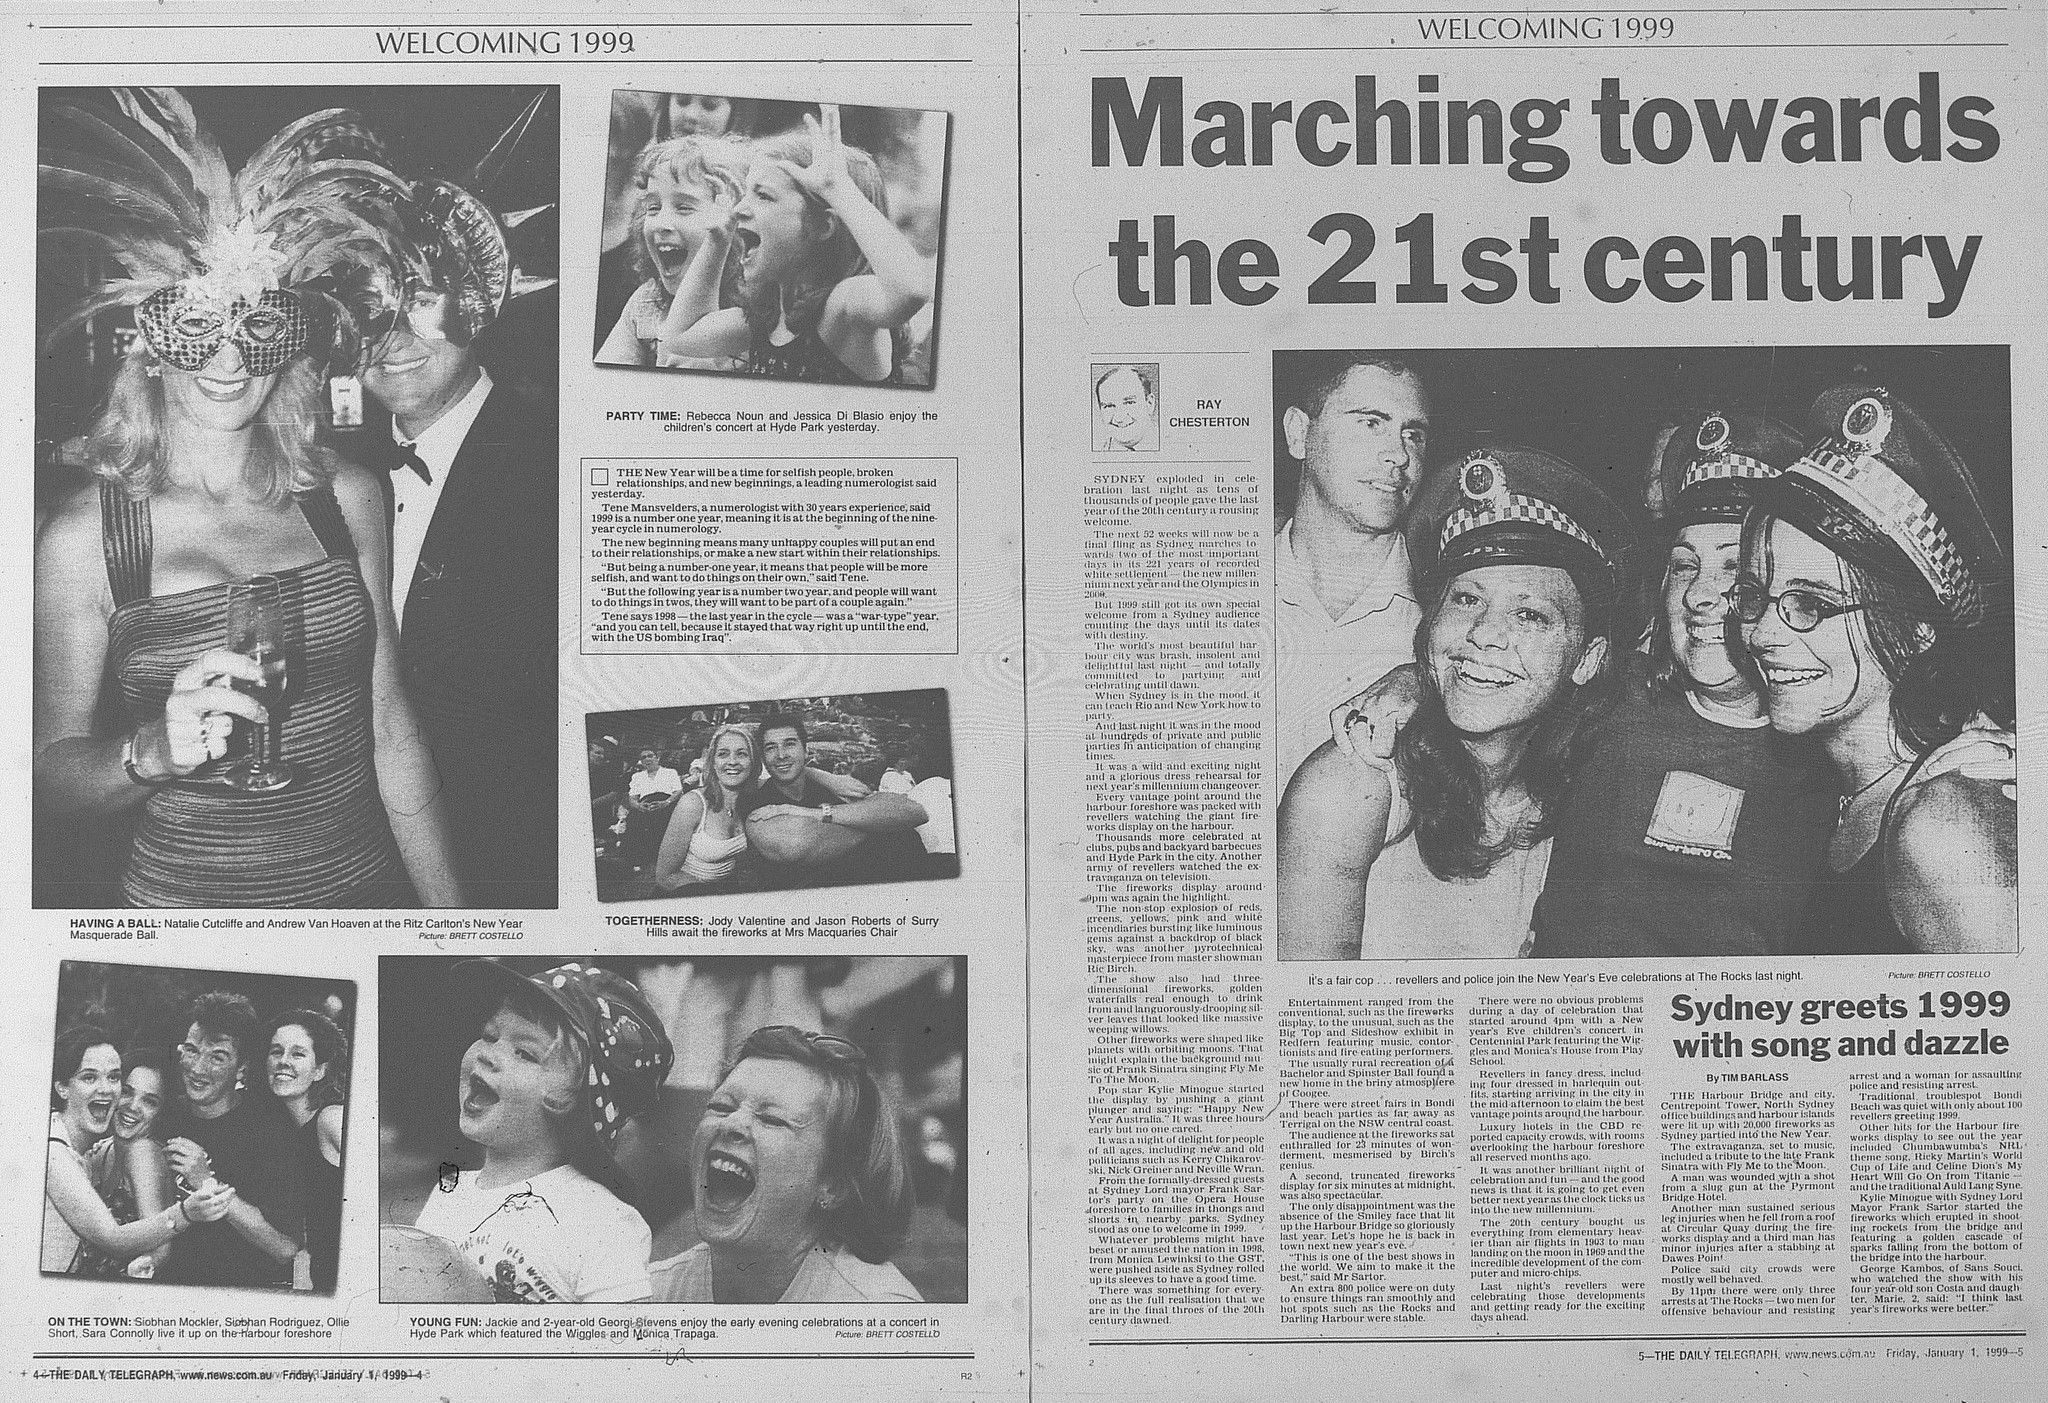 Sydney NYE January 1 1999 daily telegraph 4-5